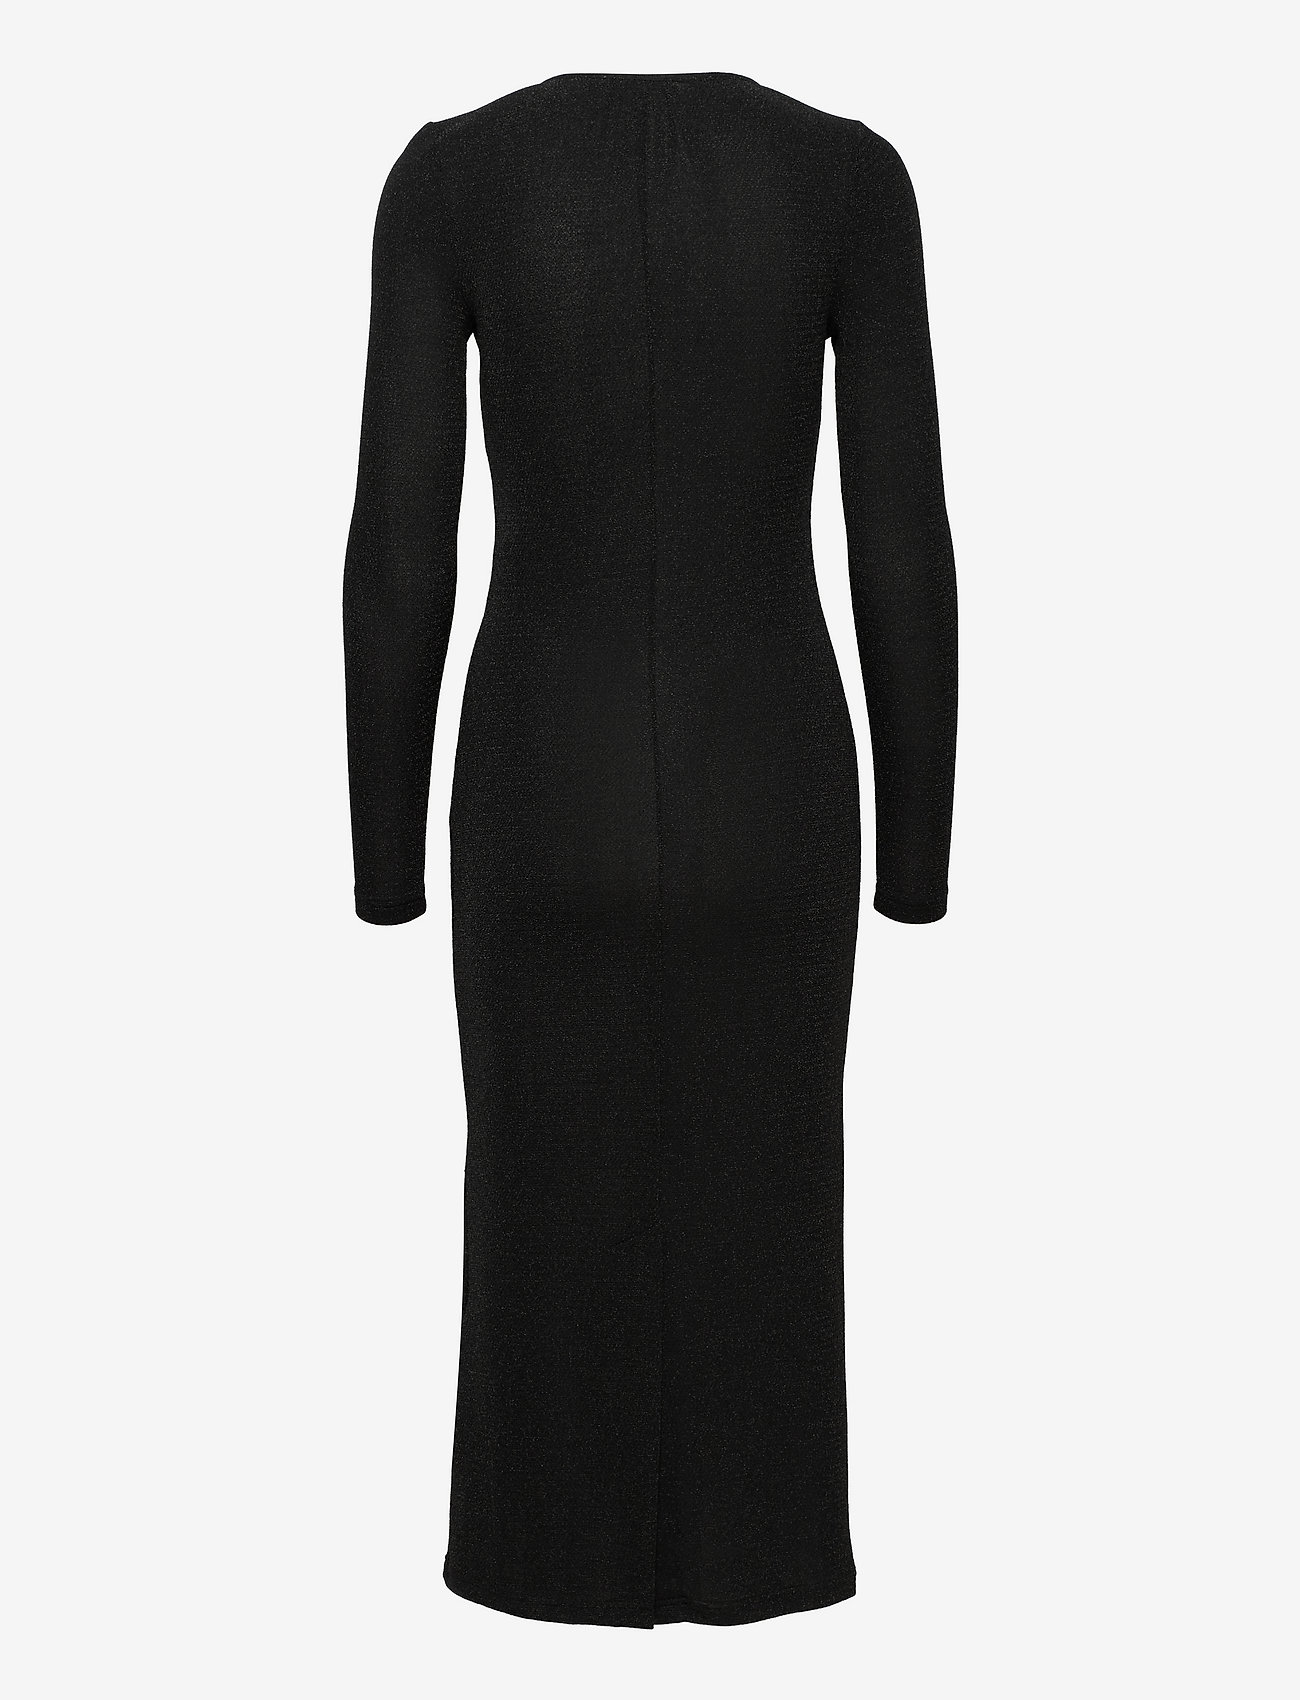 bzr - Luella Ida dress - bodycon dresses - black - 1